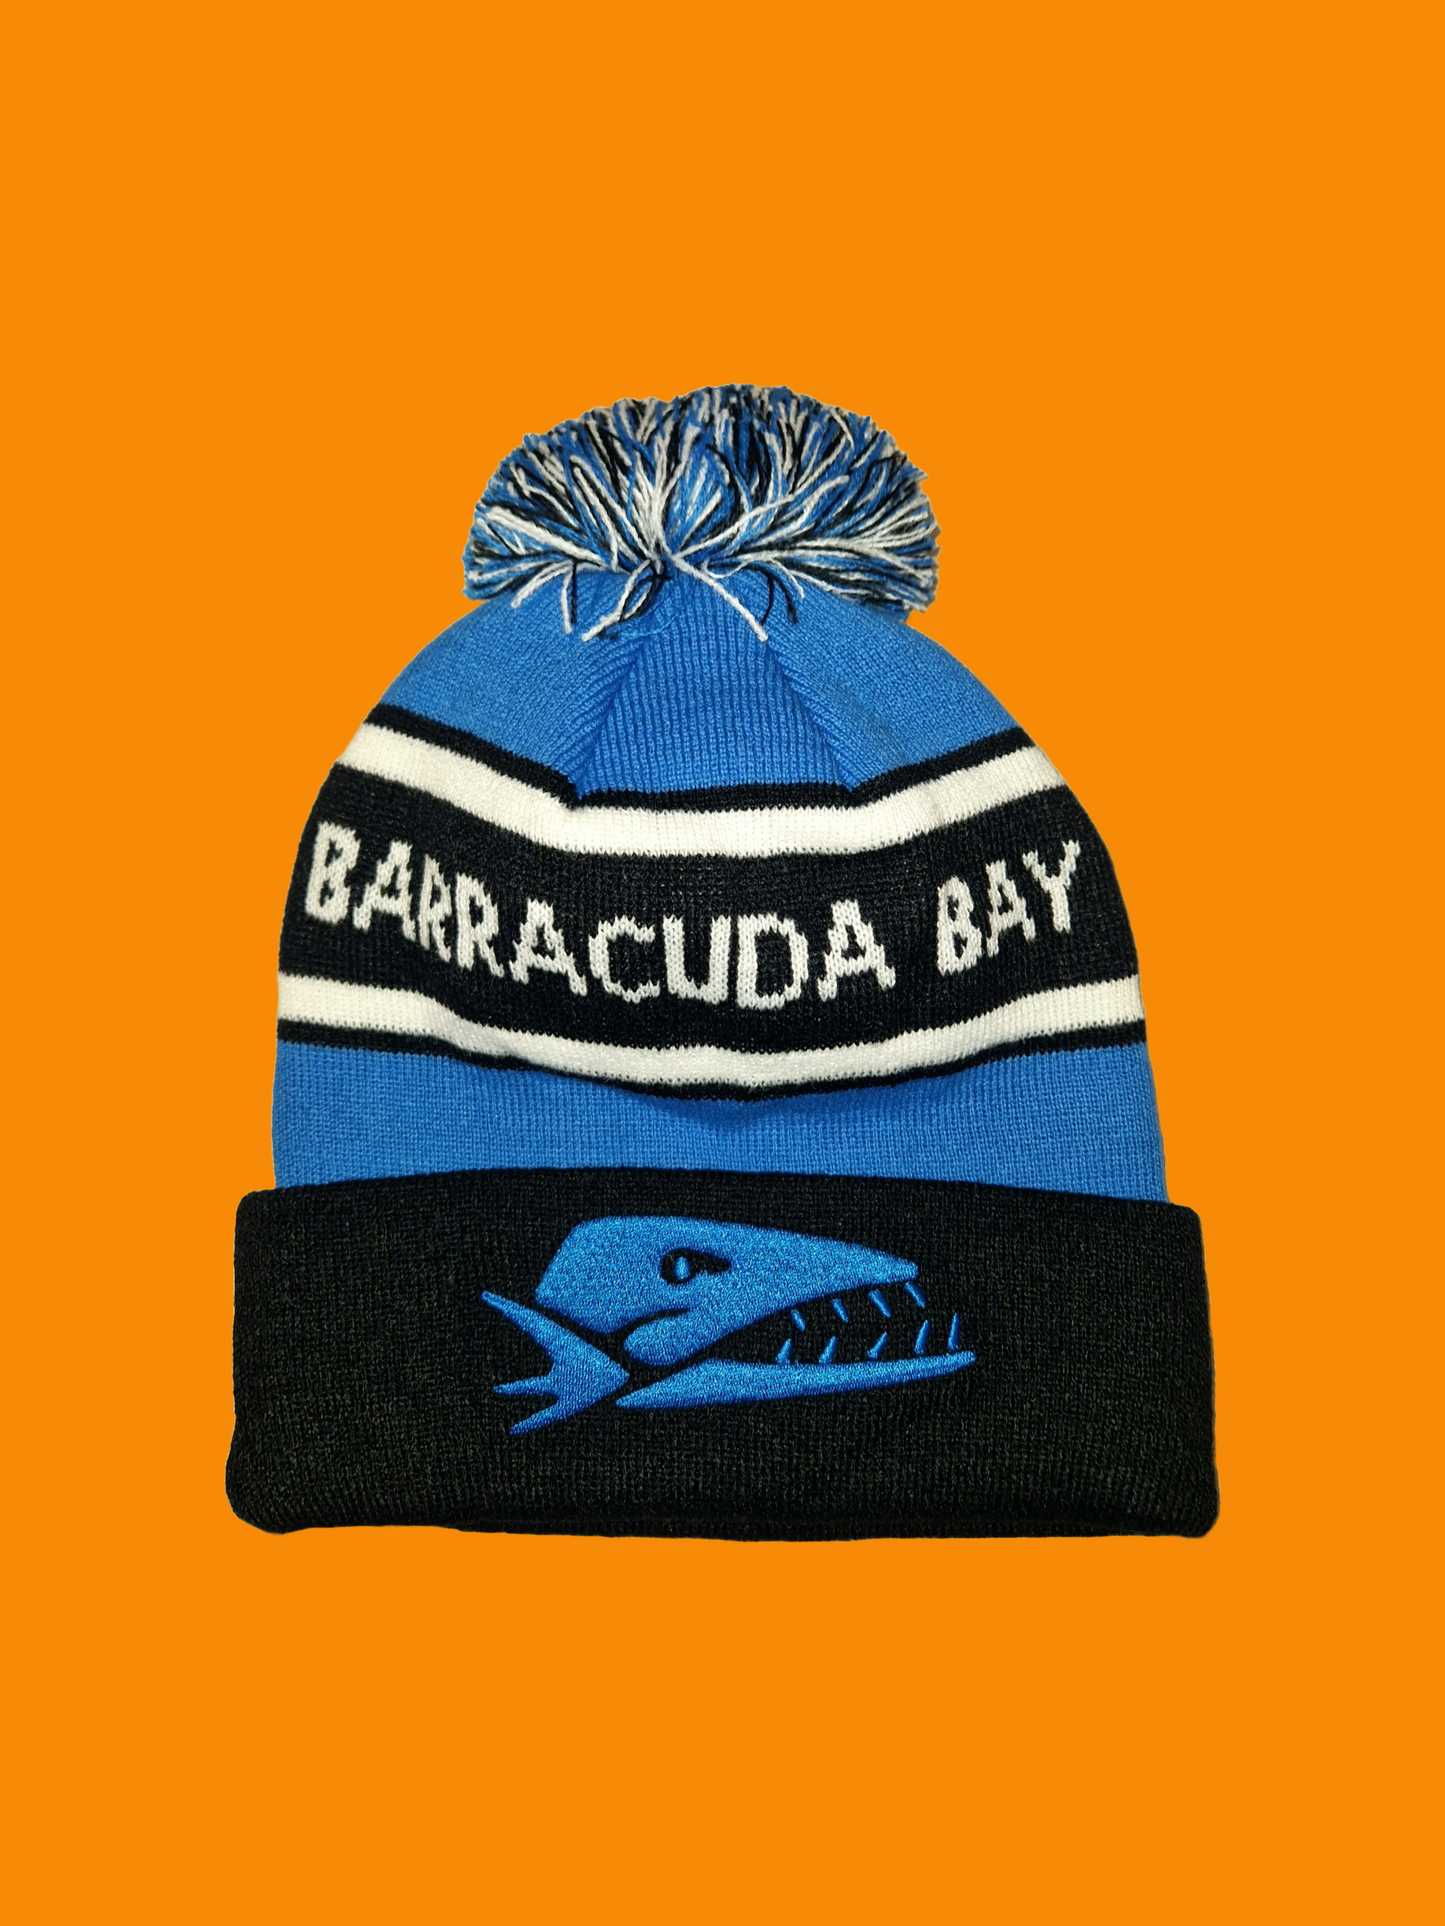 Barracuda Bobbly Beanie